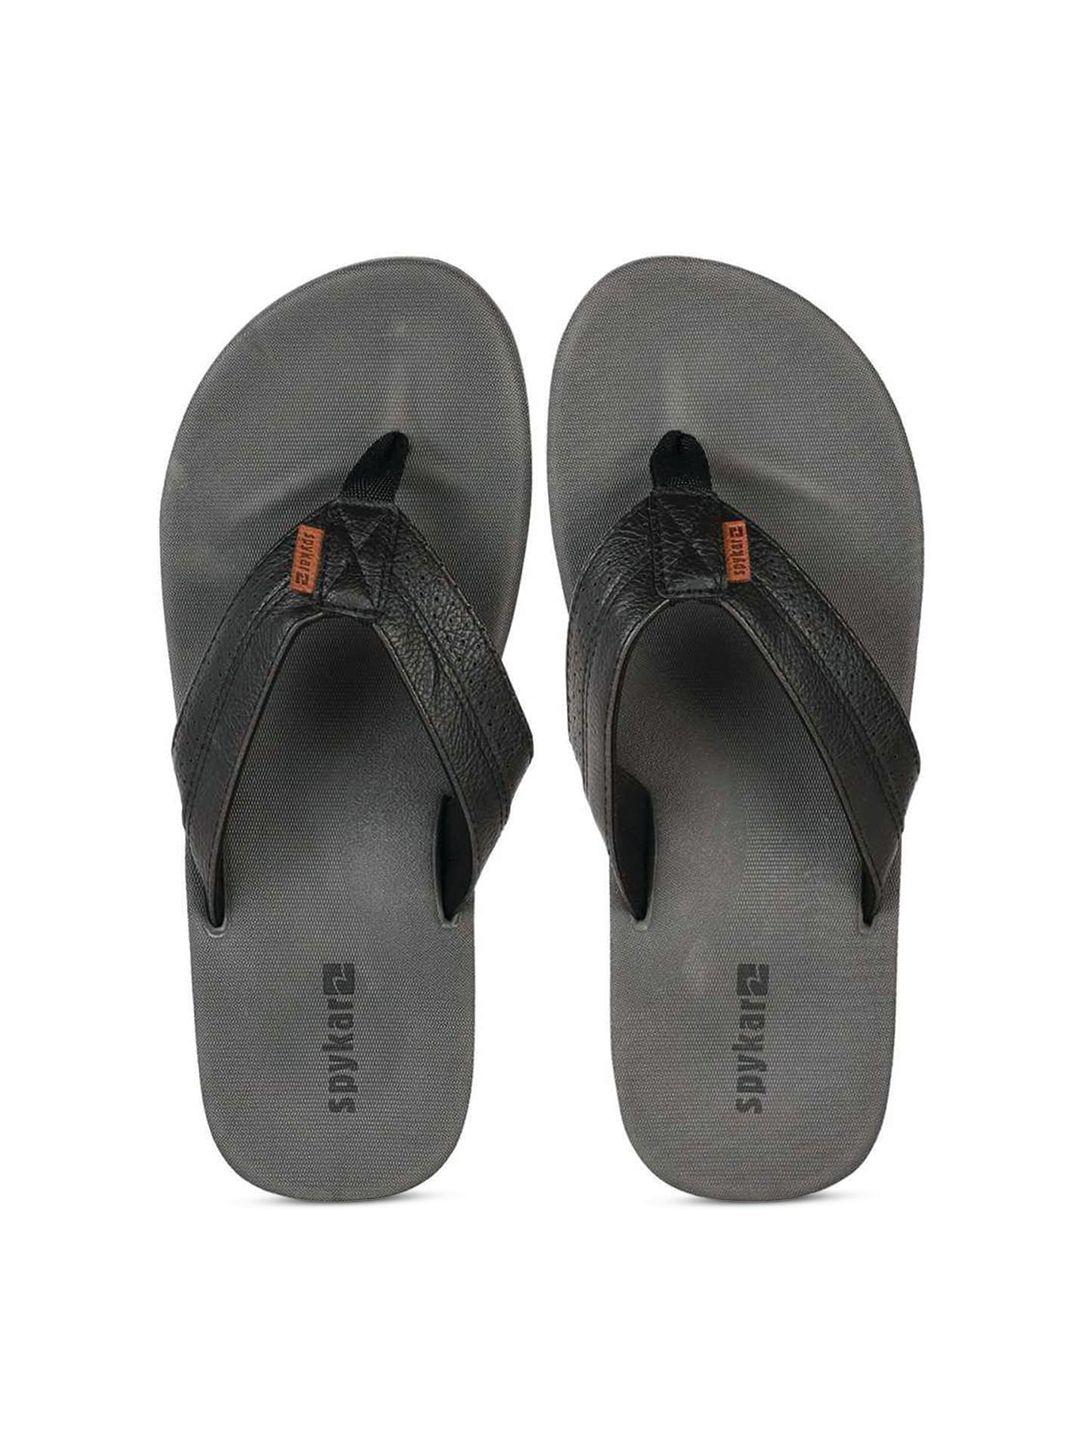 spykar-men-grey-&-black-rubber-thong-flip-flops